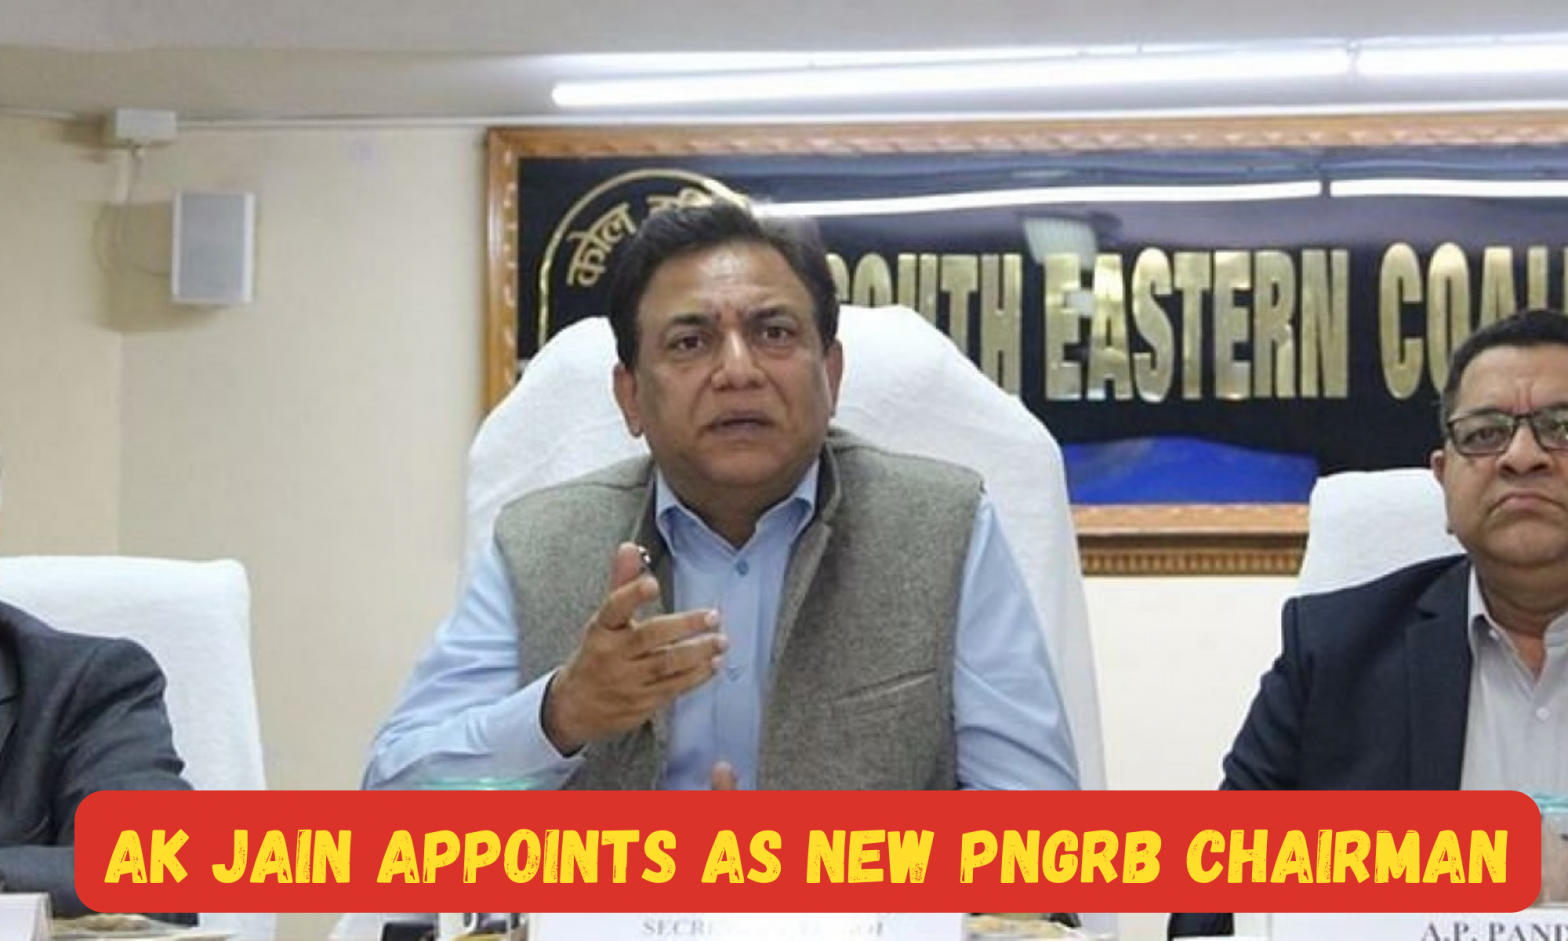 AK Jain appoints as new PNGRB Chairman